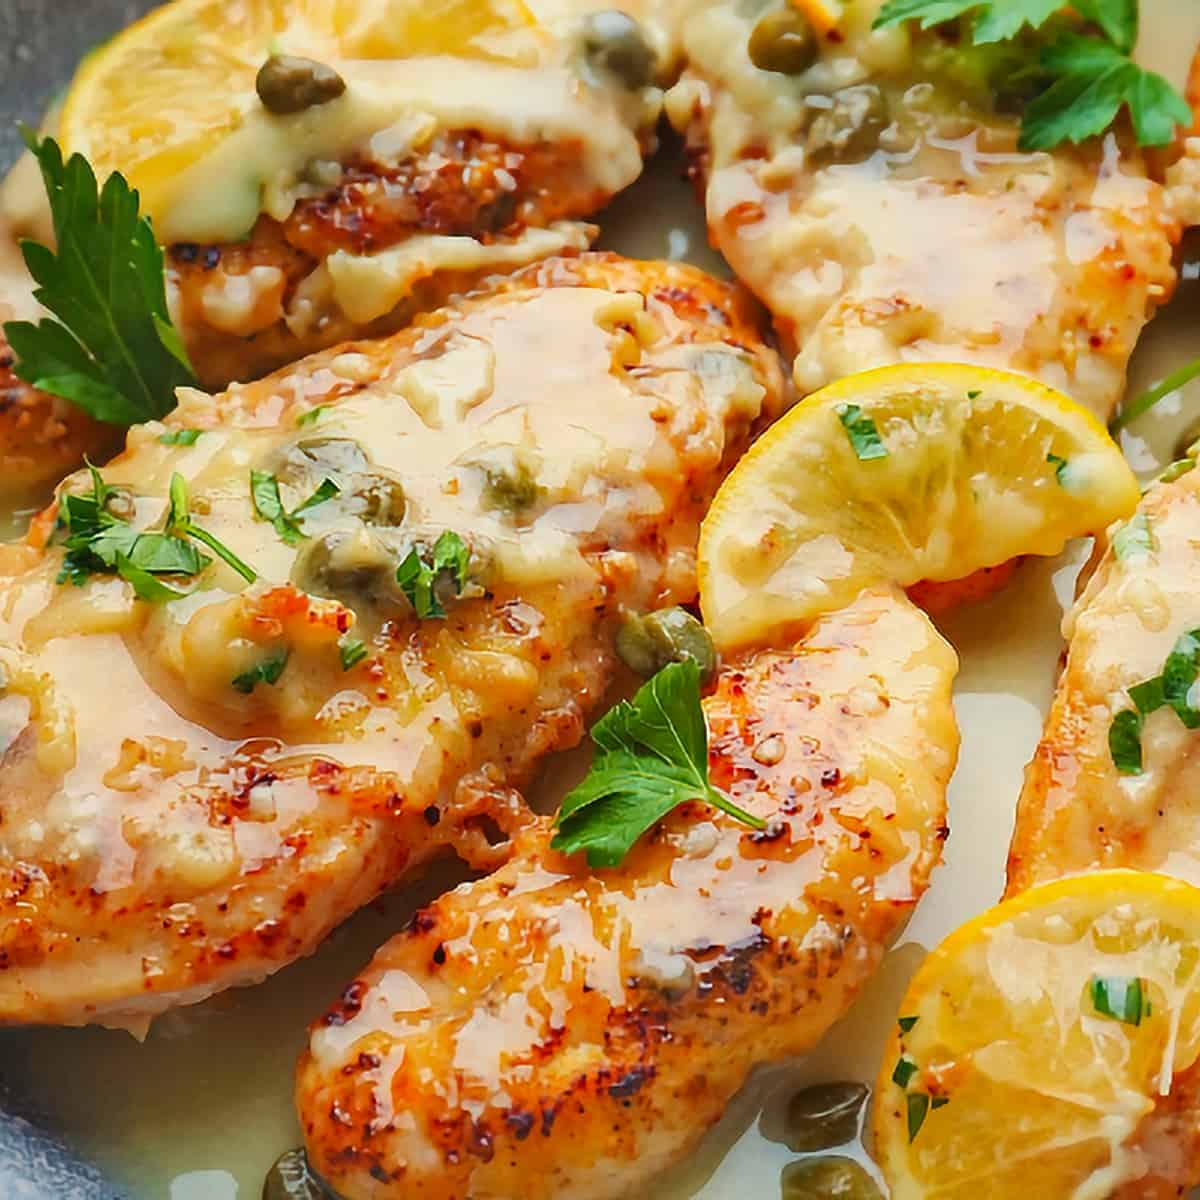 6. Easy Marinated Italian Chicken Meal - Italian recipe with chicken breast